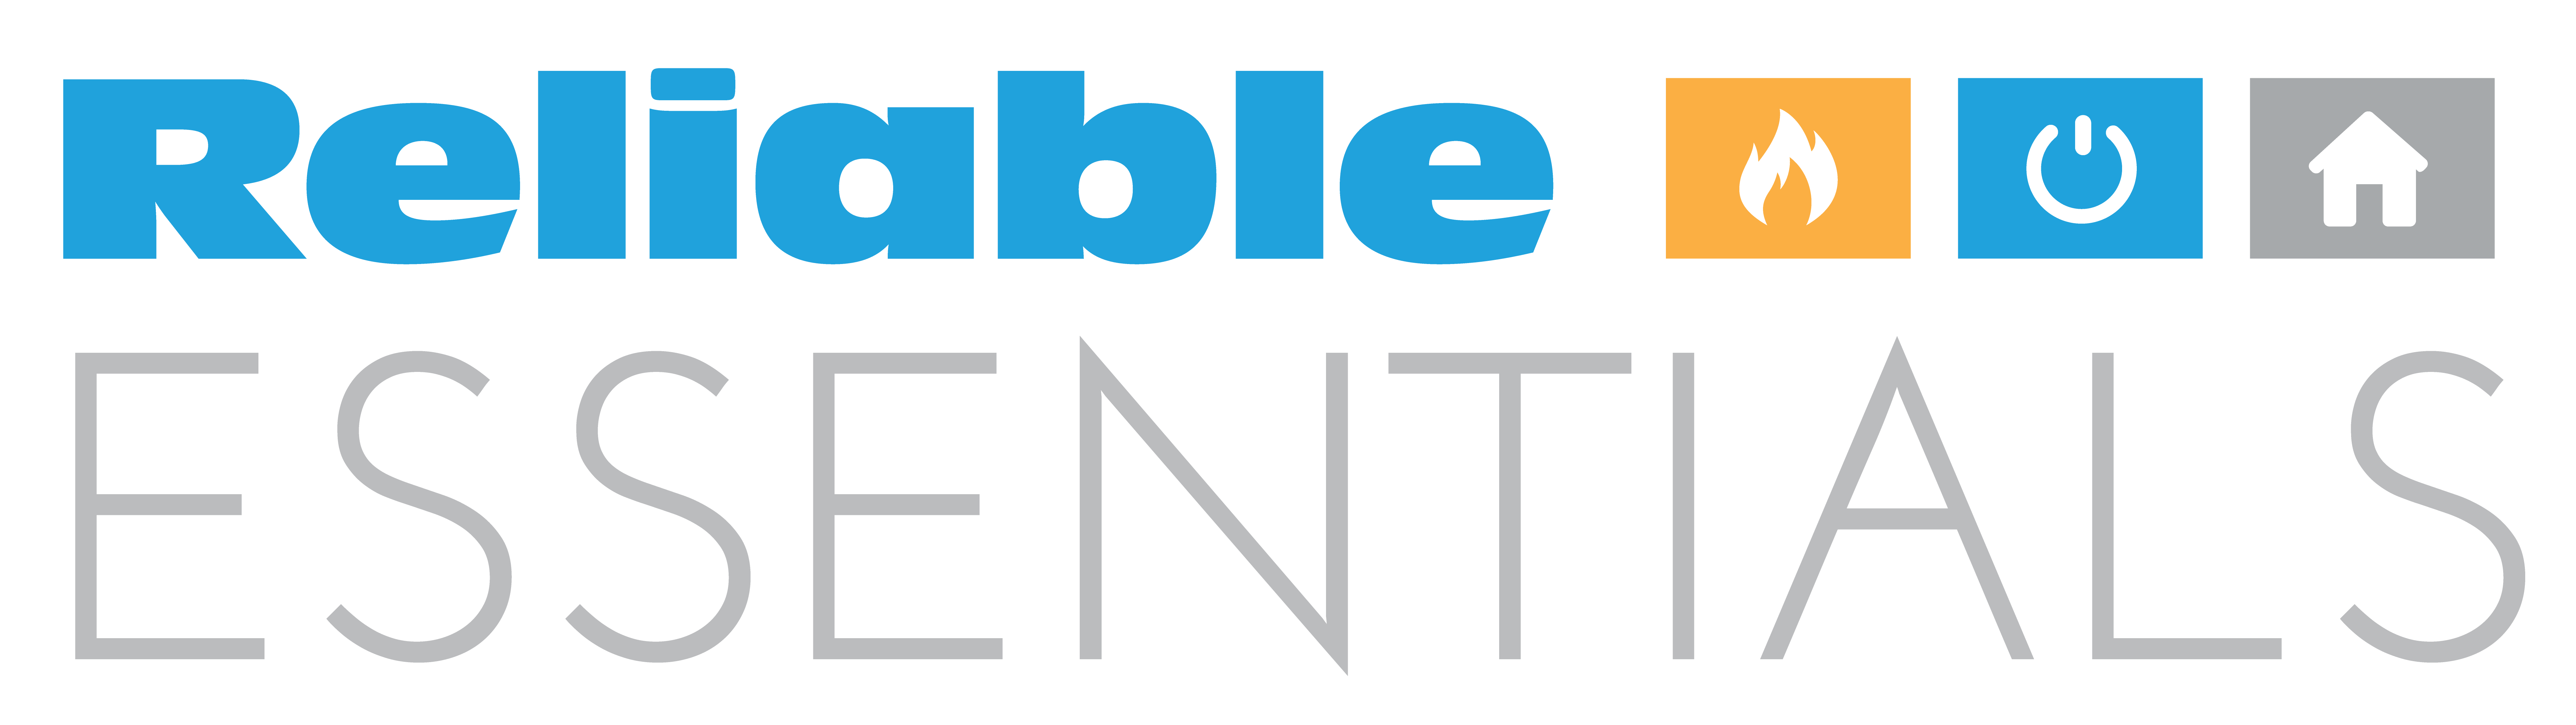 essentials logo